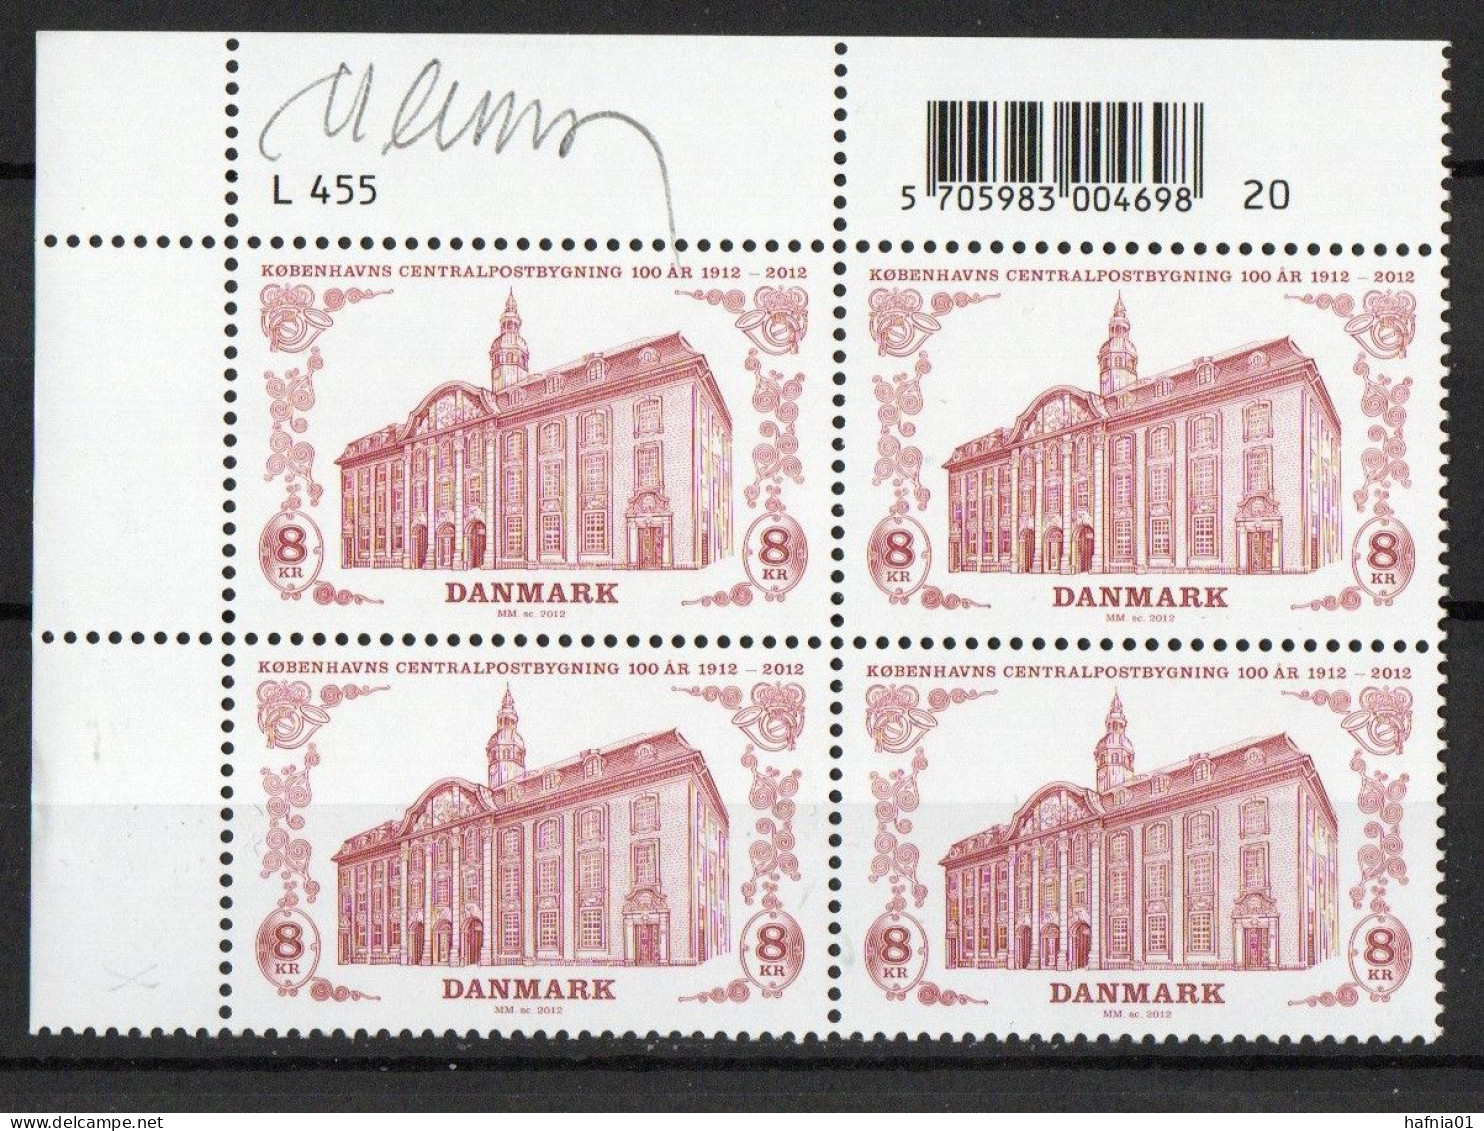 Martin Mörck. Denmark 2012. Main Post Office, Copenhagen. Michel 1718 Plate Block. MNH. Signed. - Blocks & Sheetlets